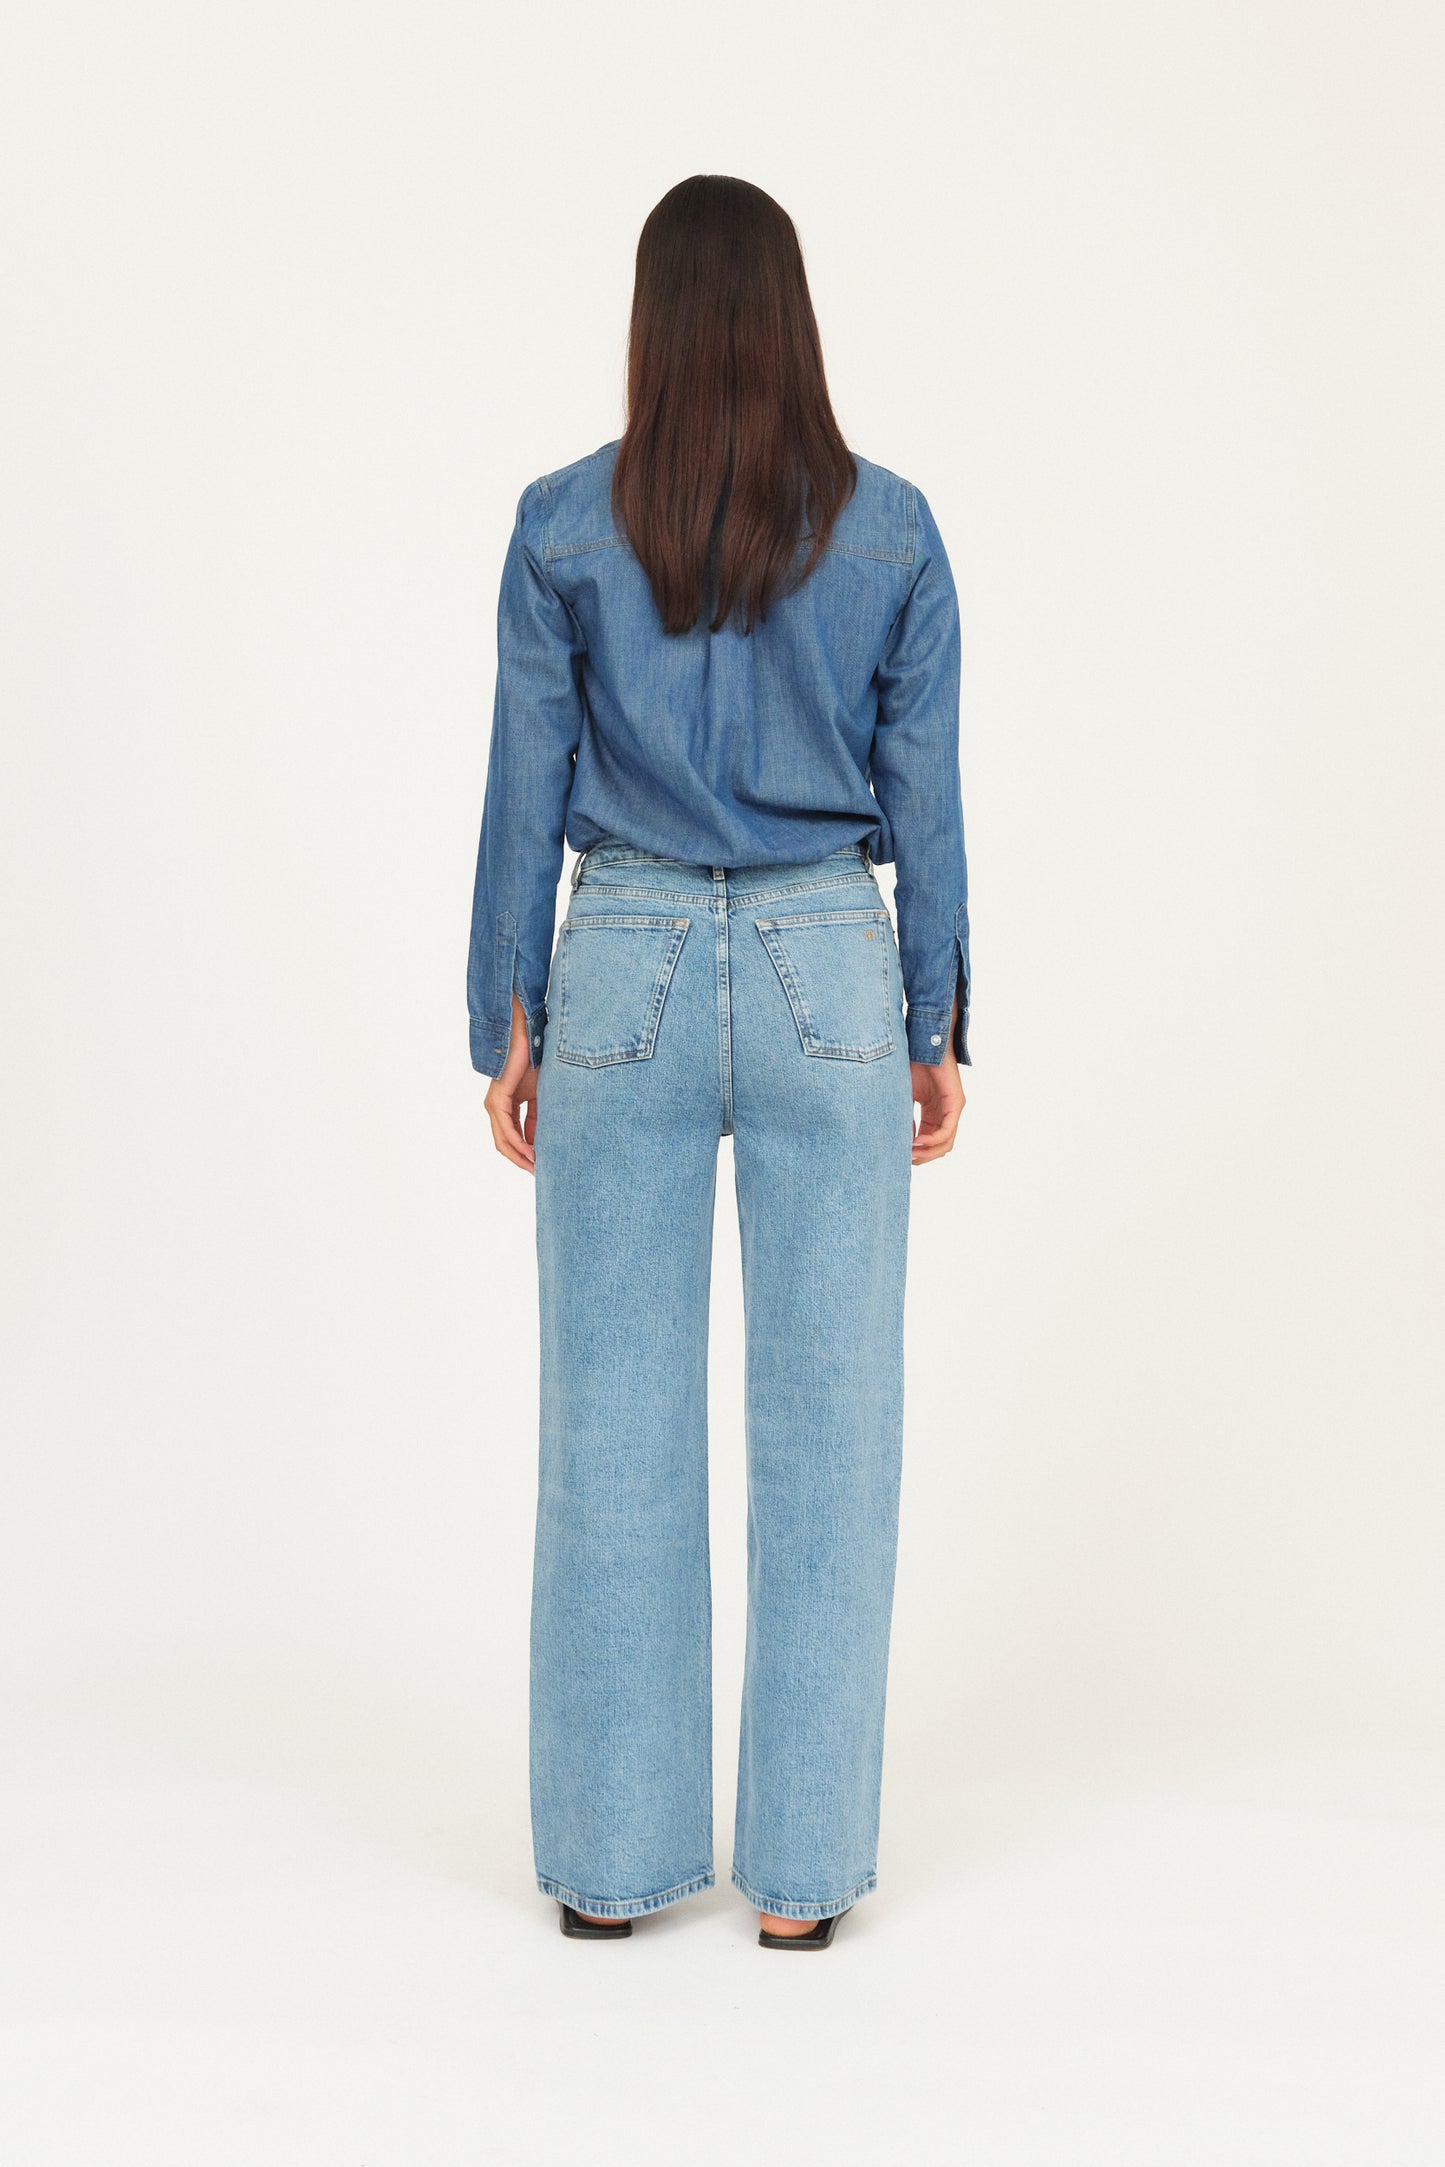 IVY Copenhagen IVY-Brooke Jeans Wash Portofino Jeans & Pants 51 Denim Blue